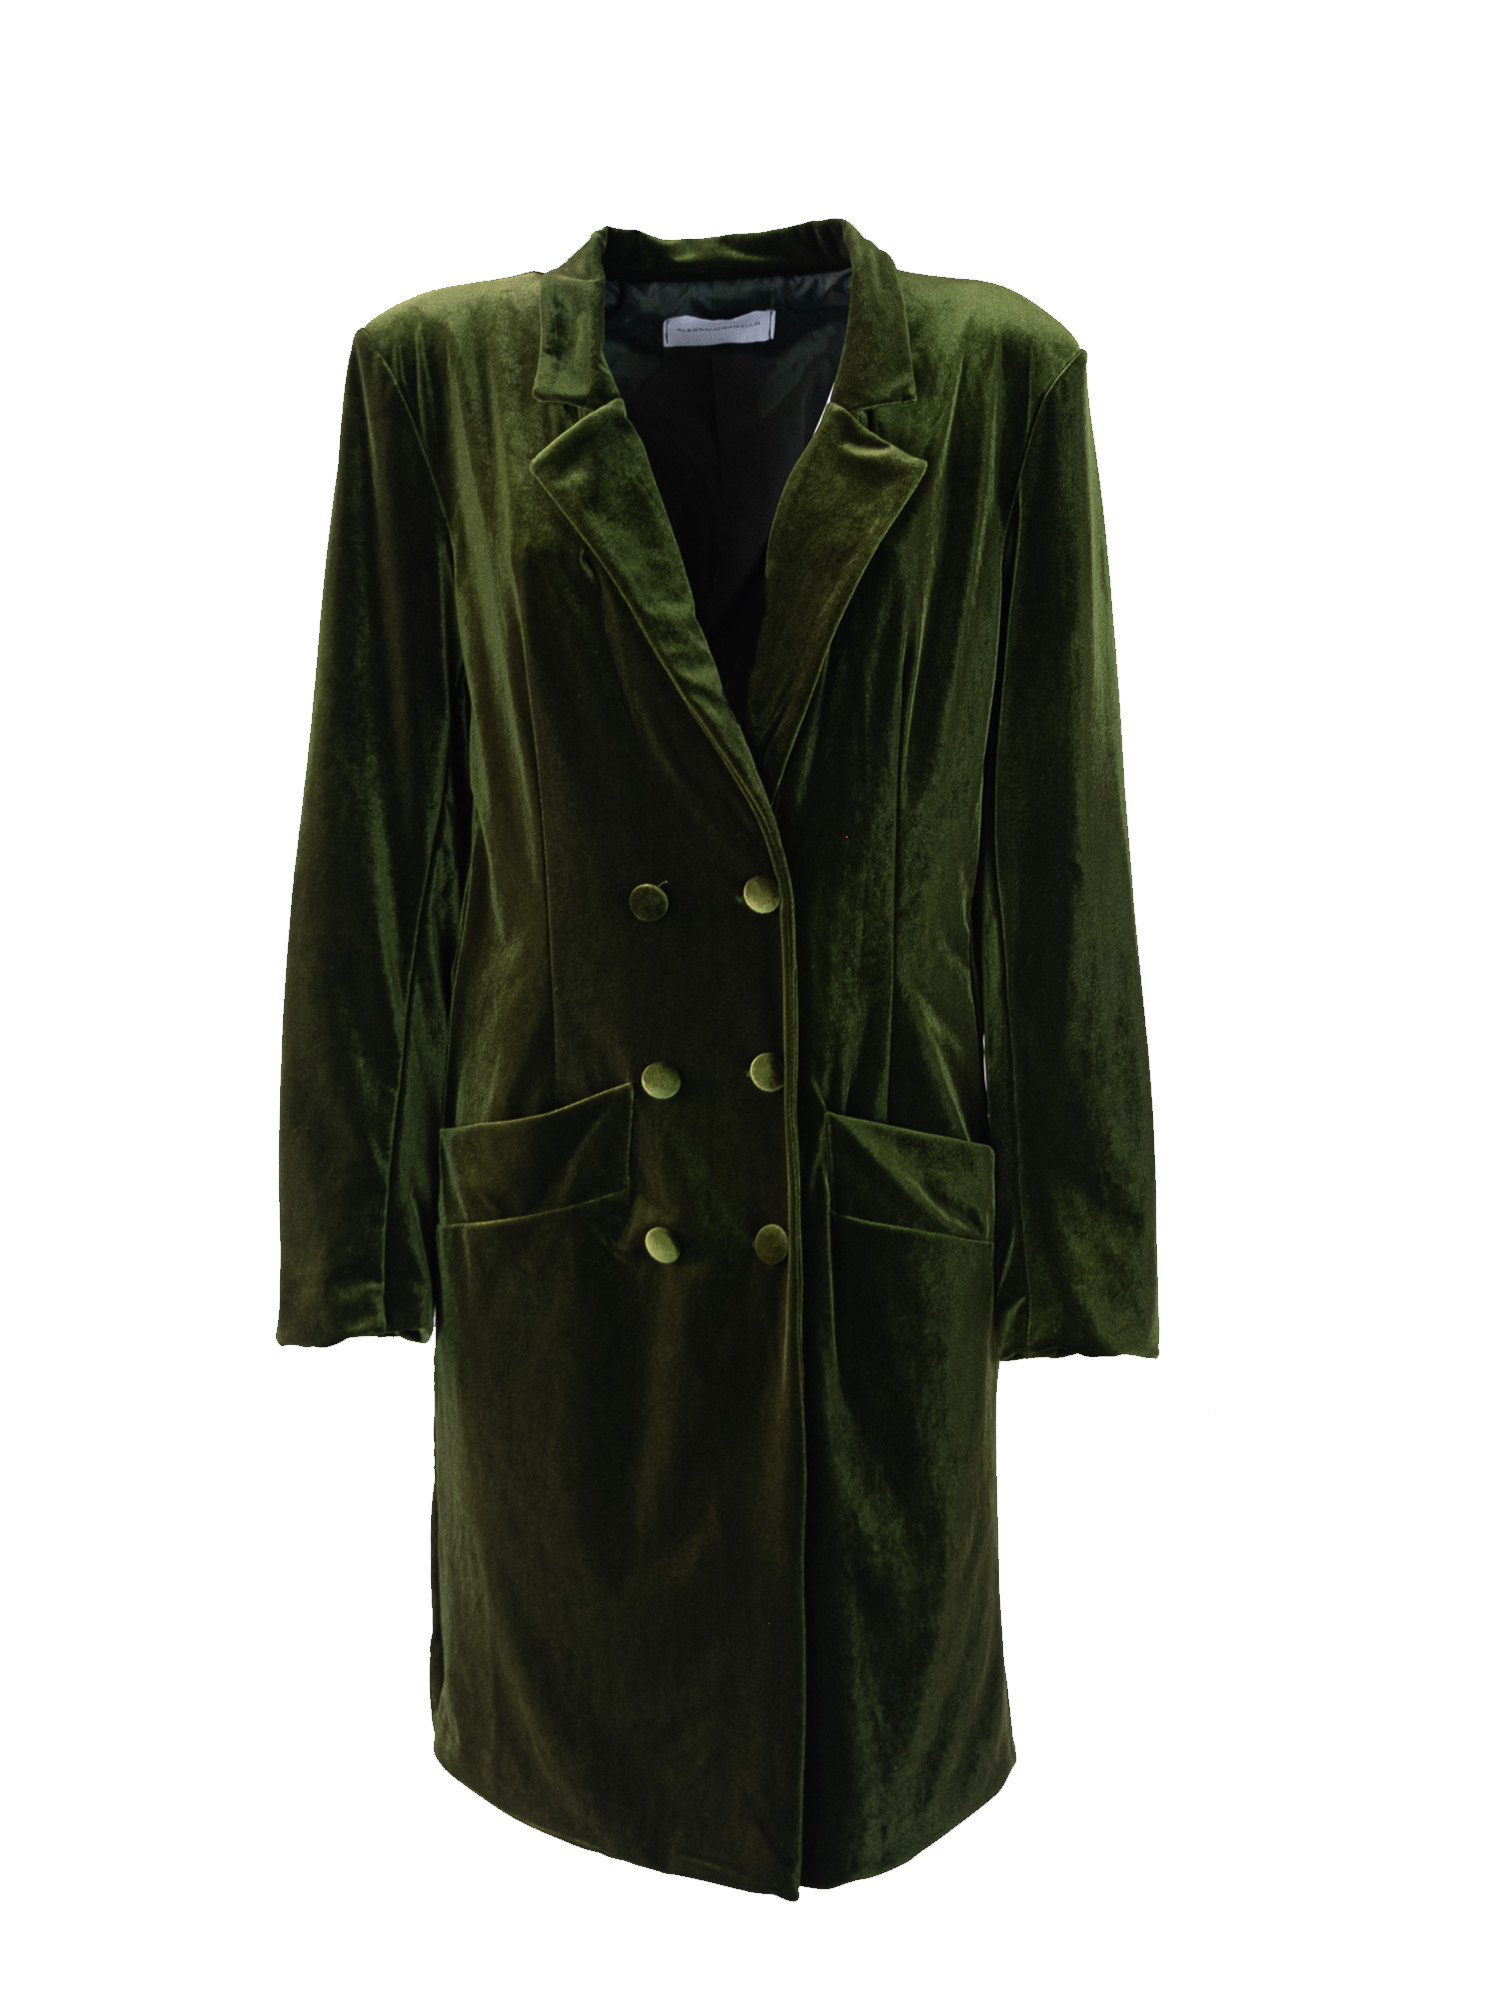 NORA - dress robe coat in green chenille